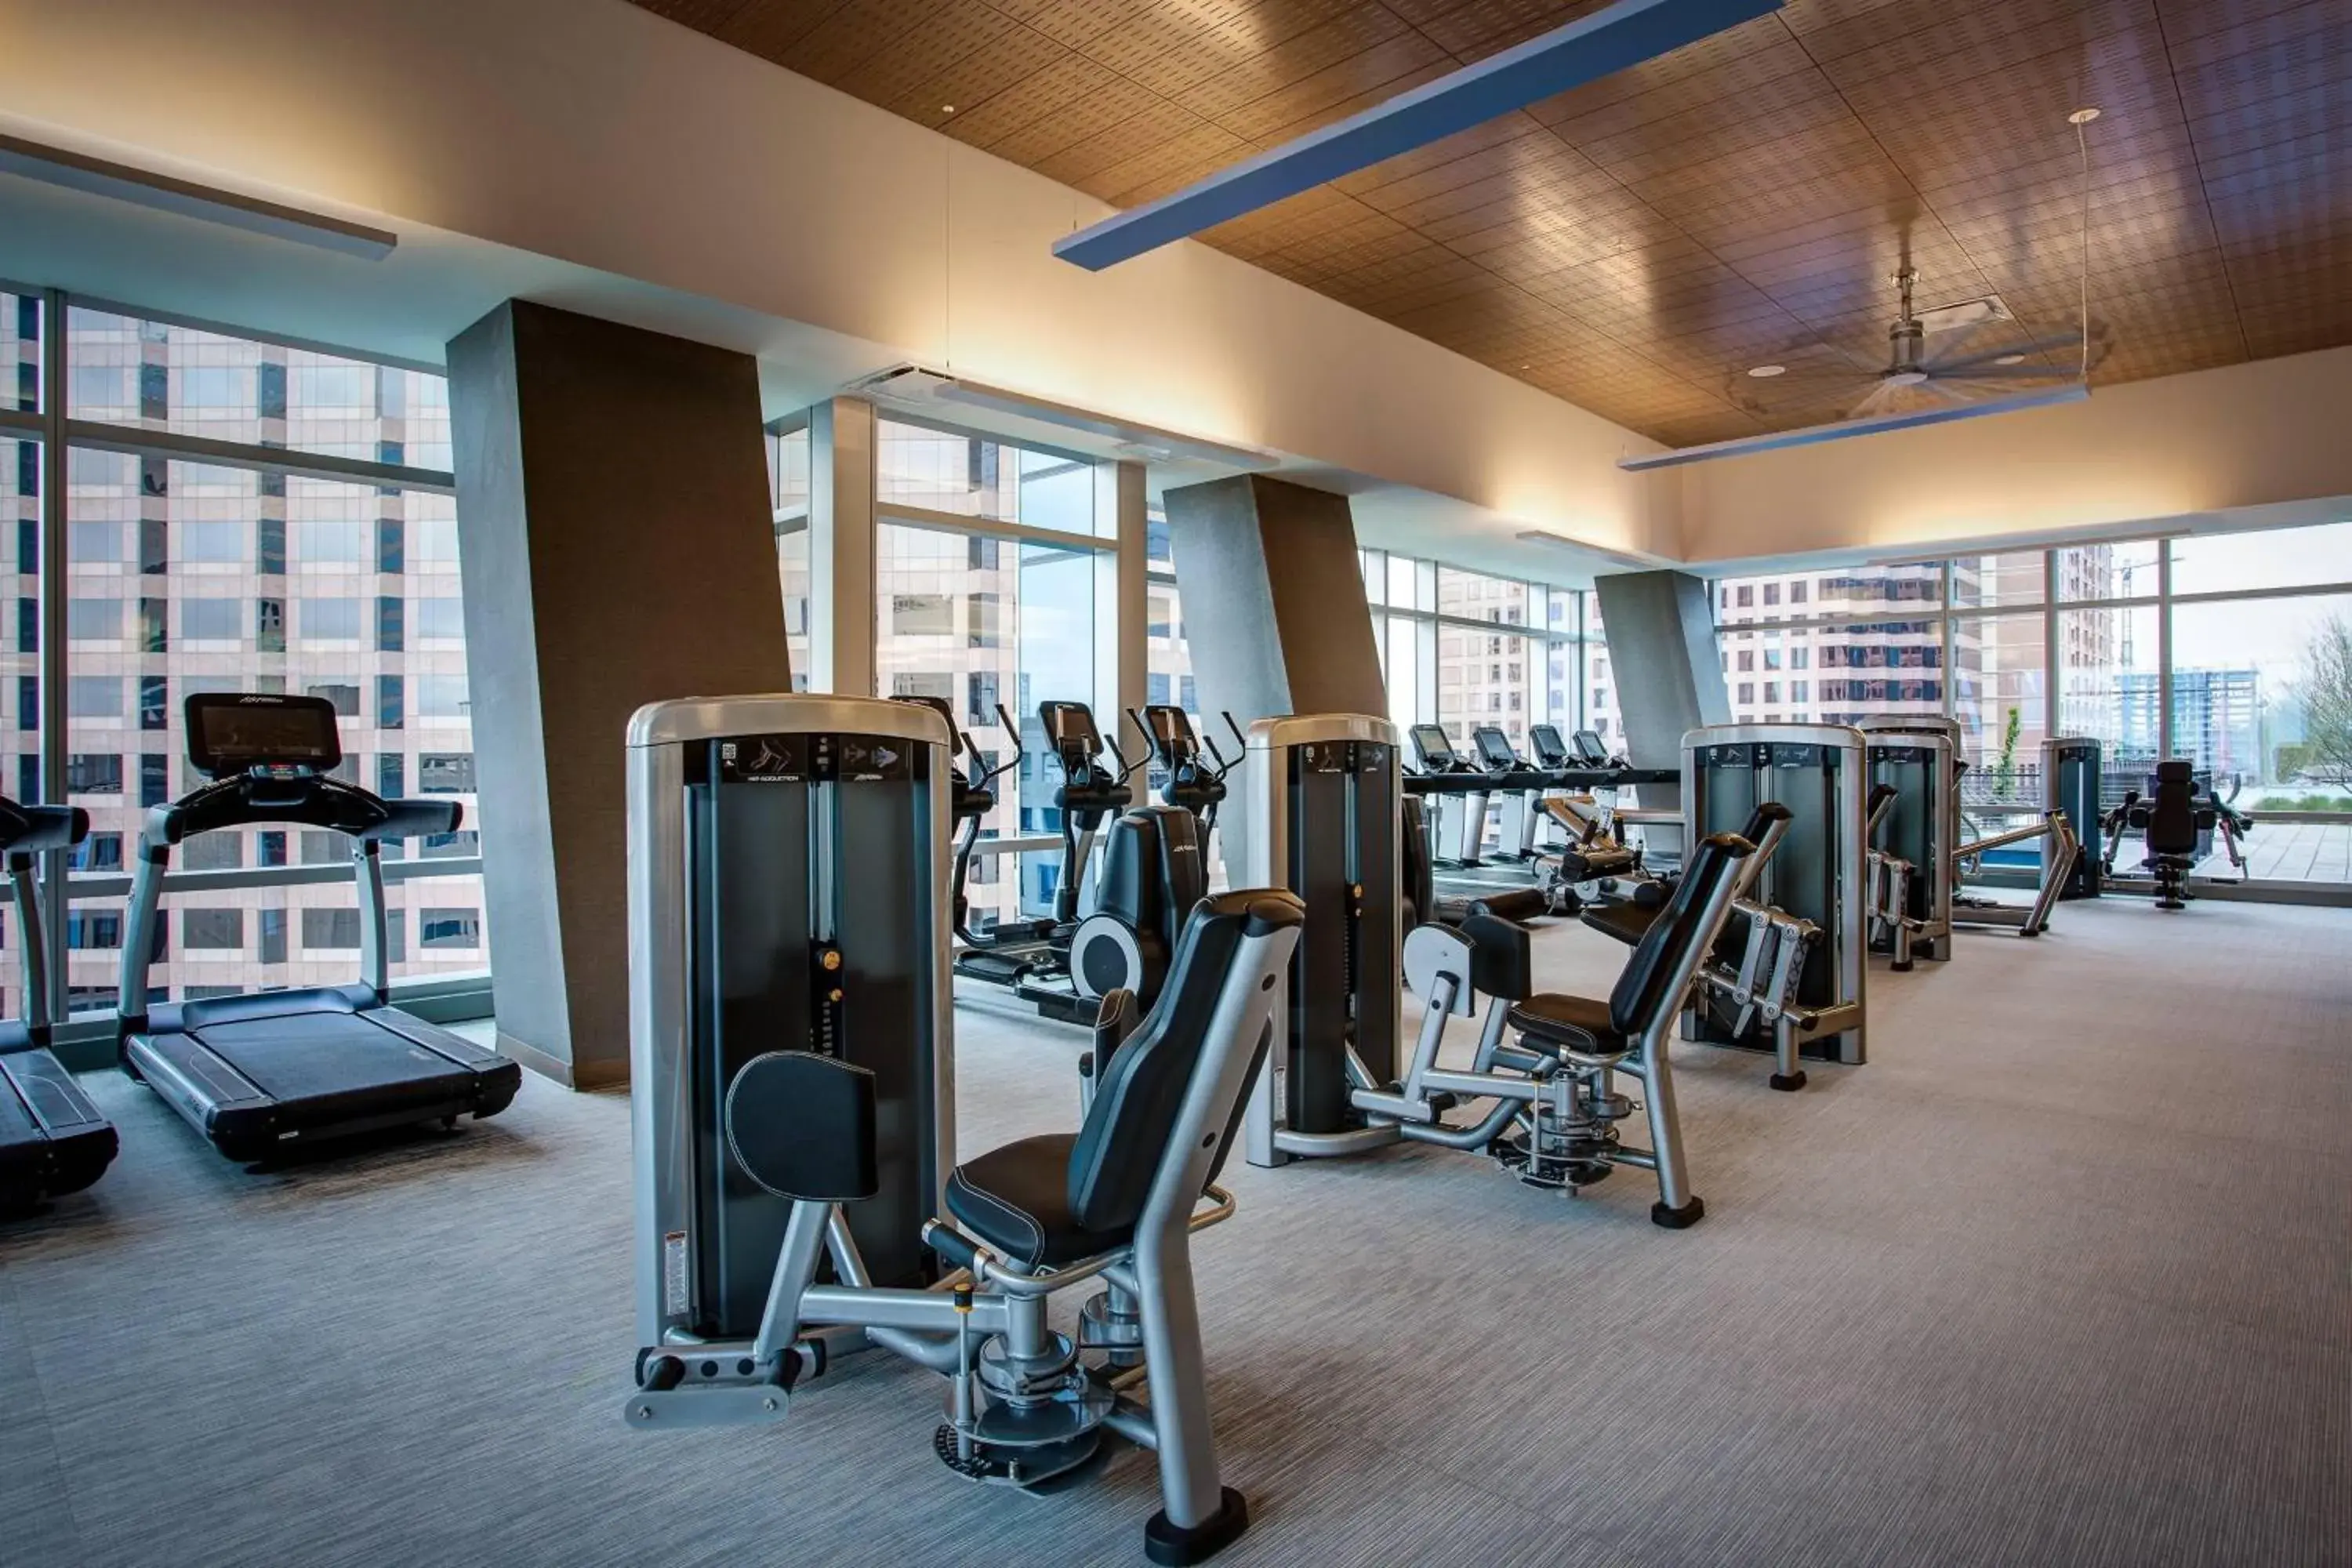 Fitness centre/facilities, Fitness Center/Facilities in JW Marriott Austin